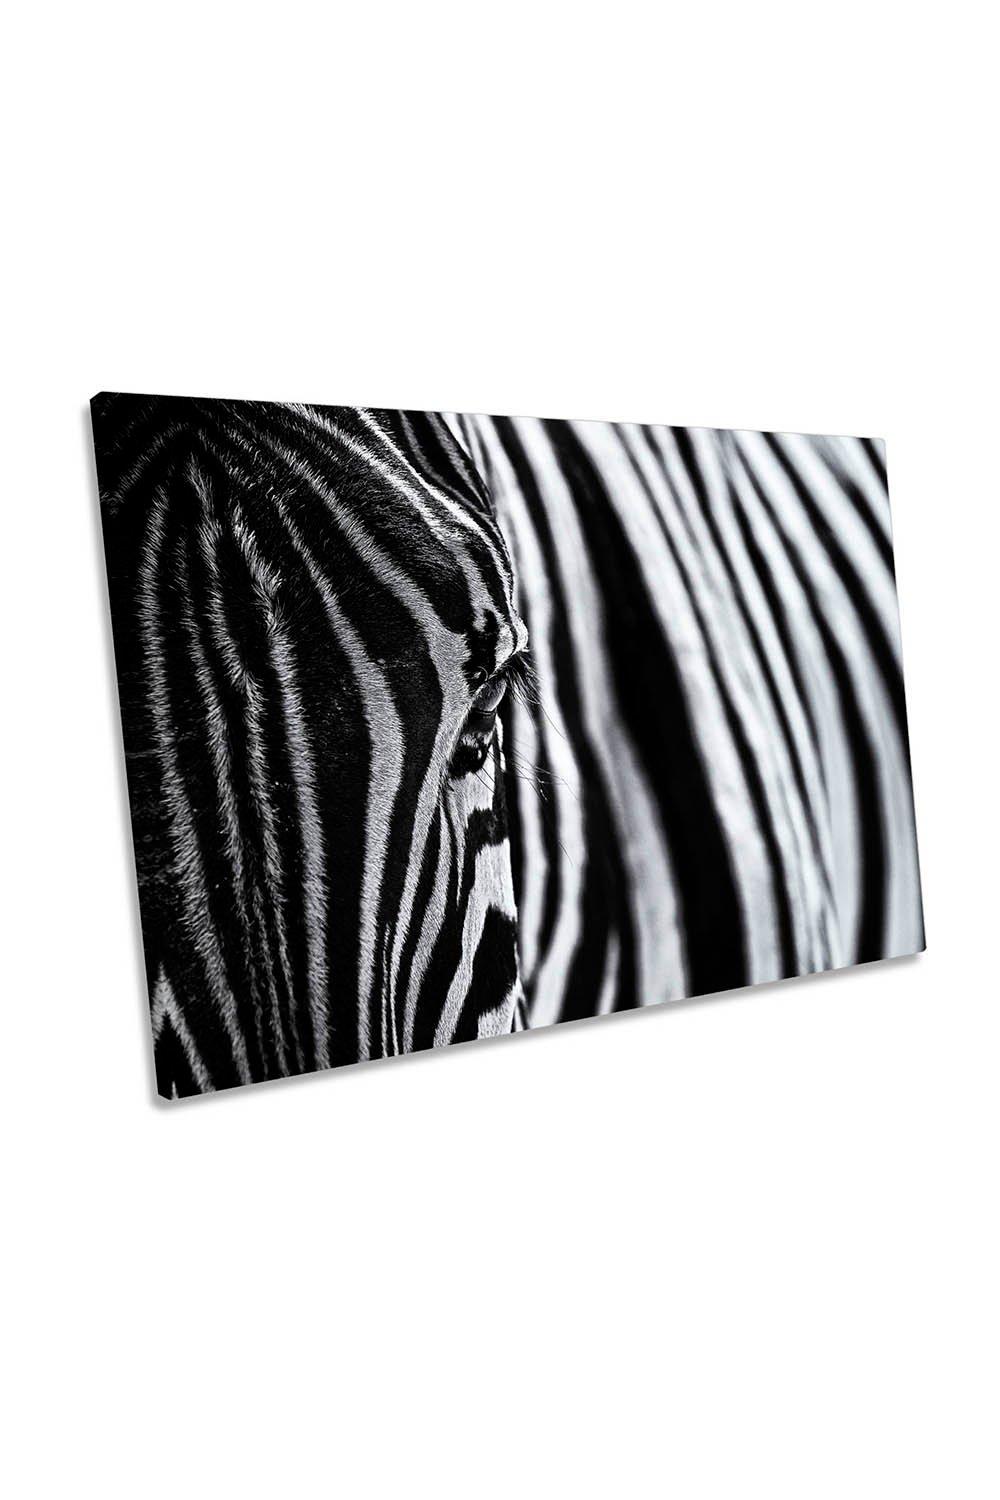 Zebra Stripes Black and White Canvas Wall Art Picture Print